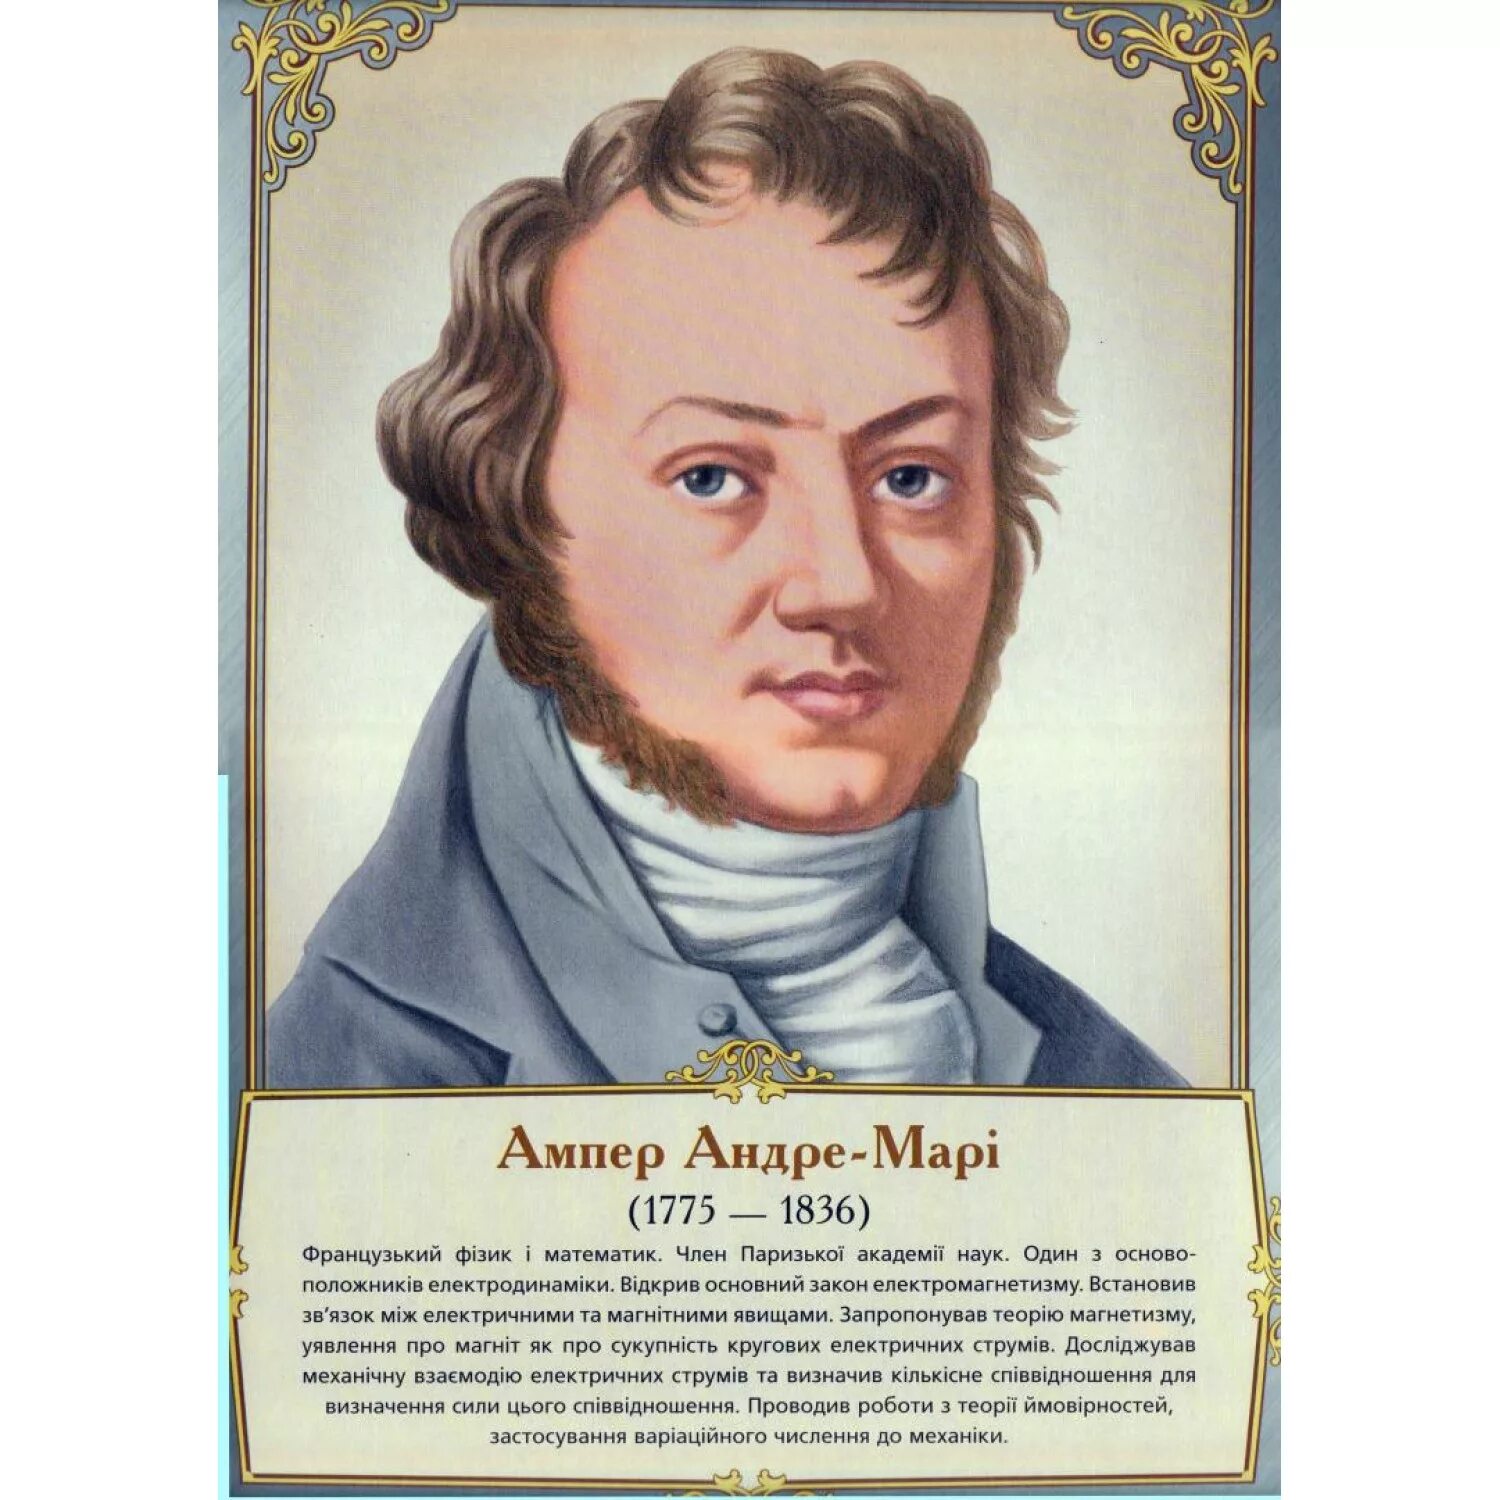 Ампер чем известен. Андре-Мари ампер. Андре ампер портрет. Физики портрет Андре ампер. Ампер физик портрет.